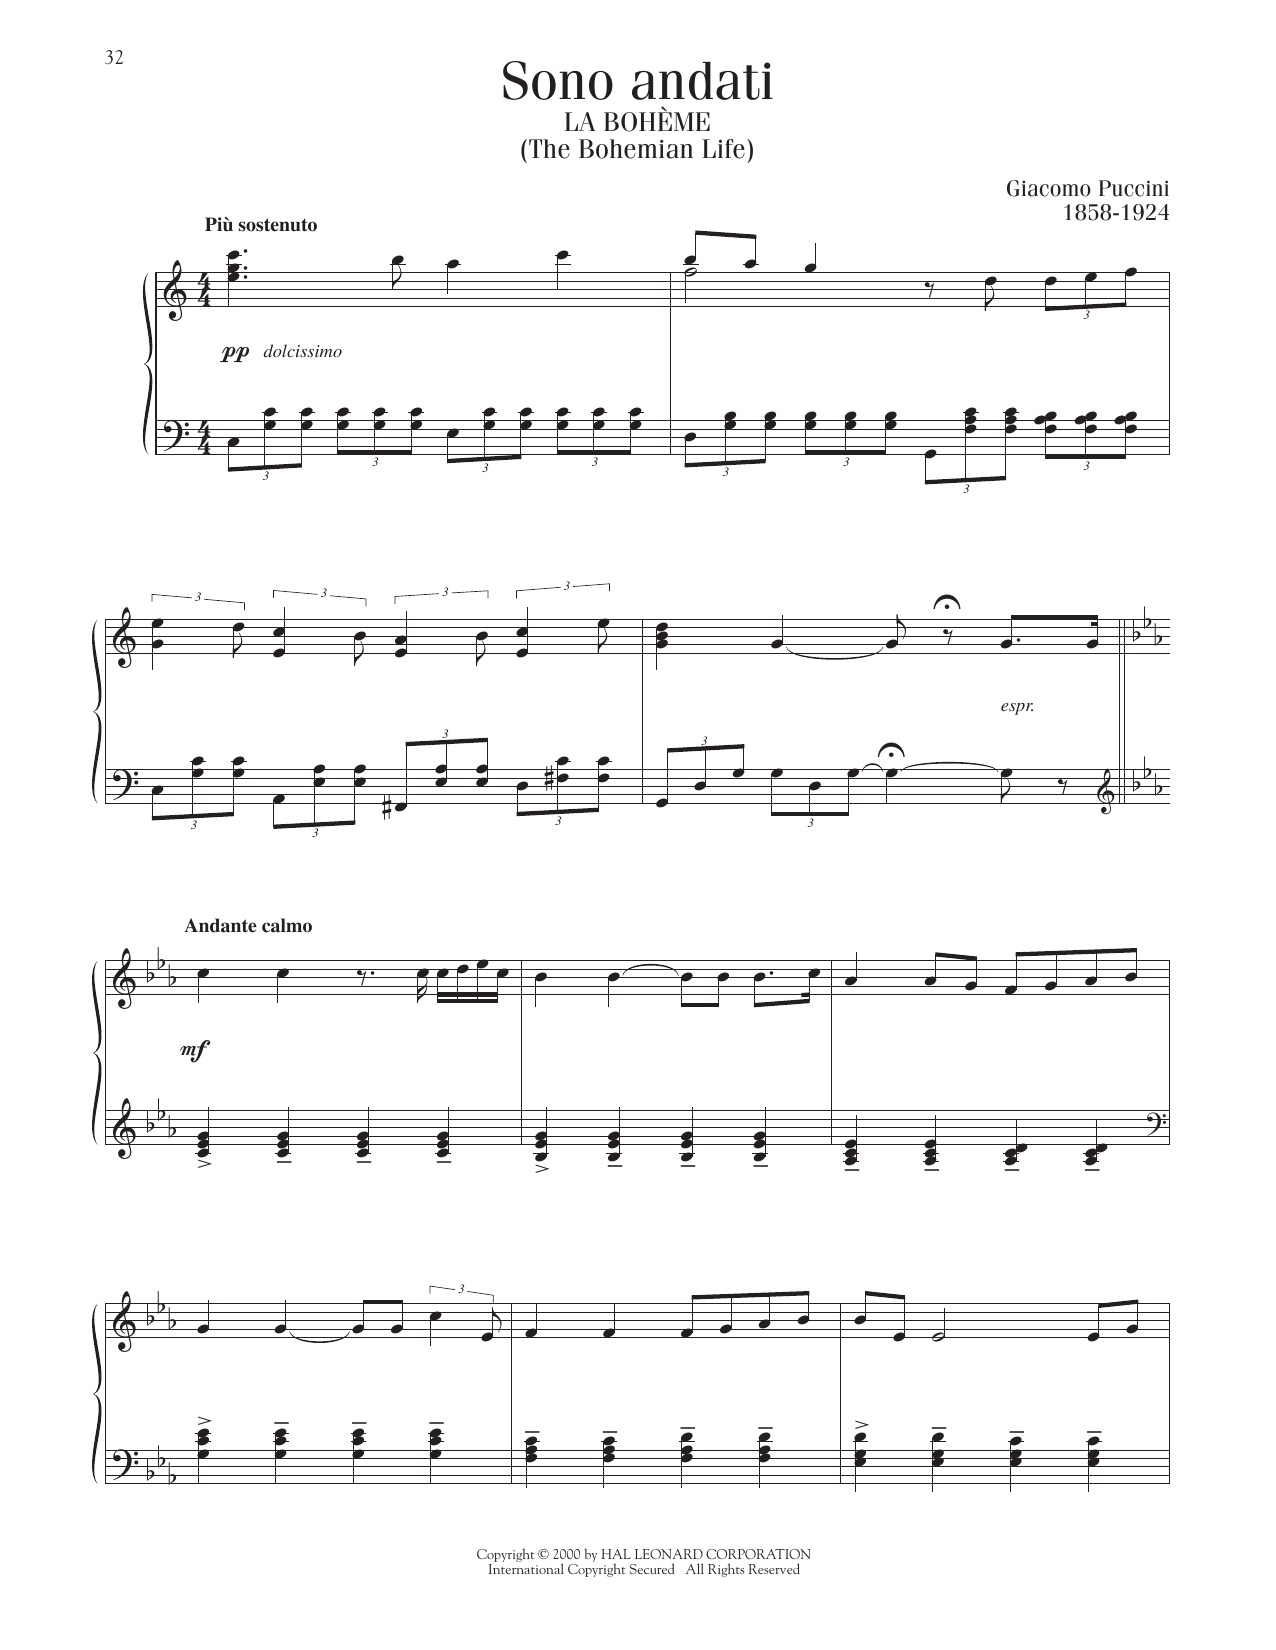 Giacomo Puccini Sono andati sheet music notes printable PDF score